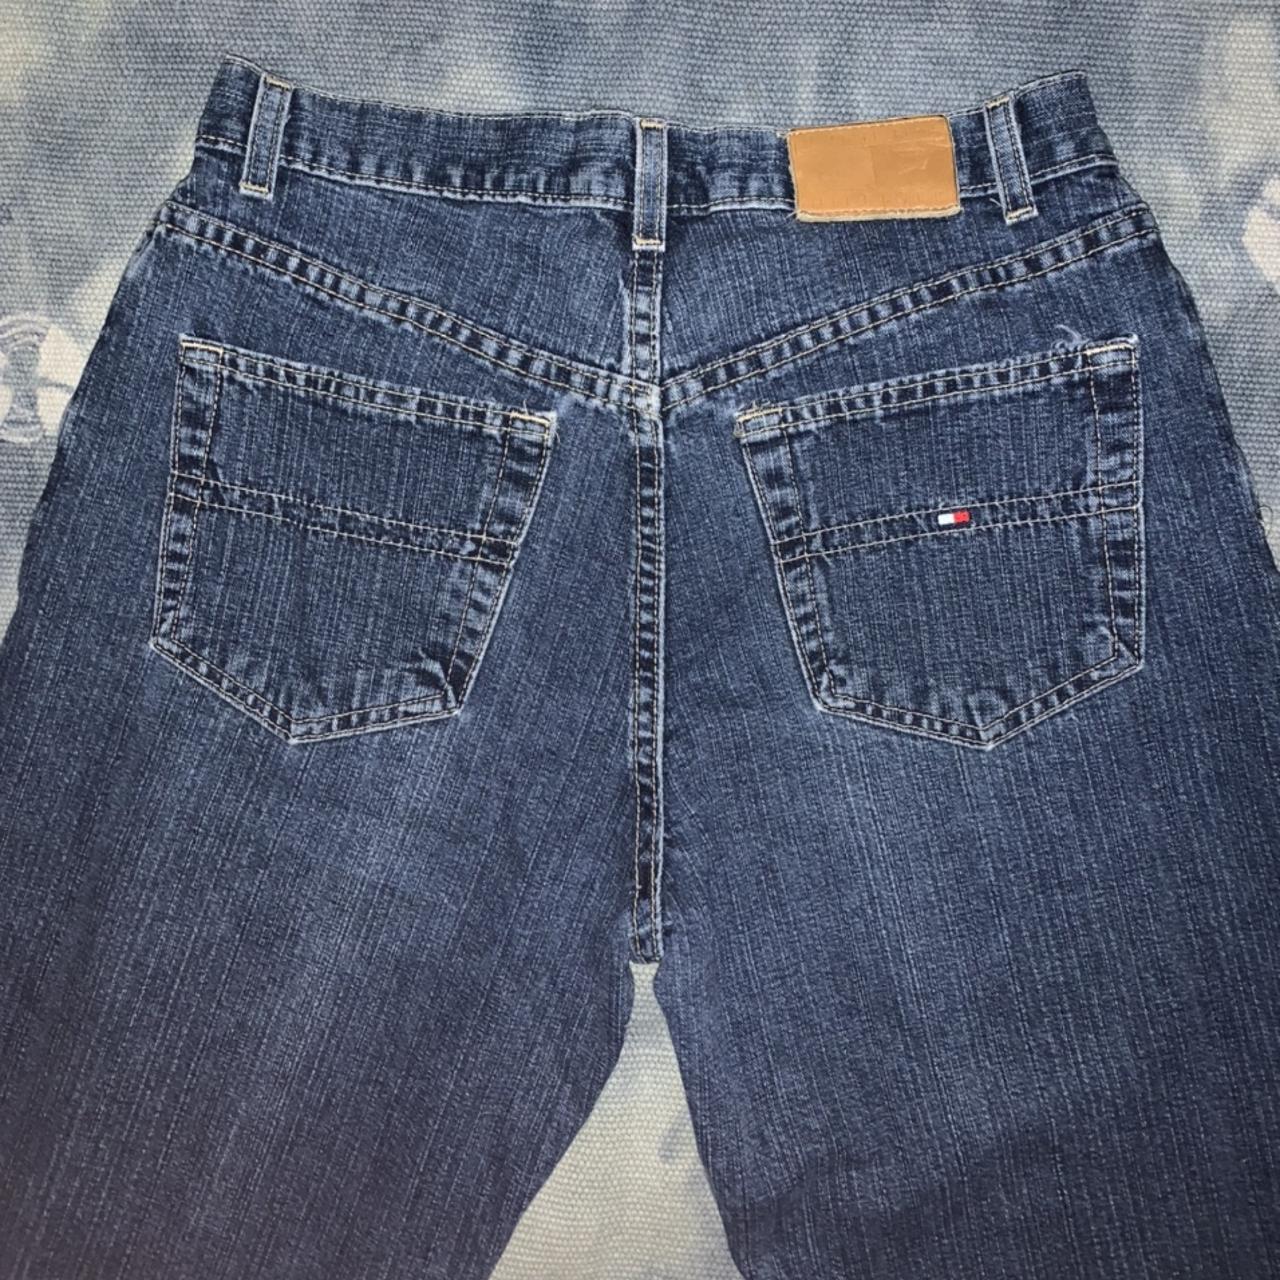 TOMMY HILFIGER jeans 🌲Capri Style 🌲Size: US... - Depop